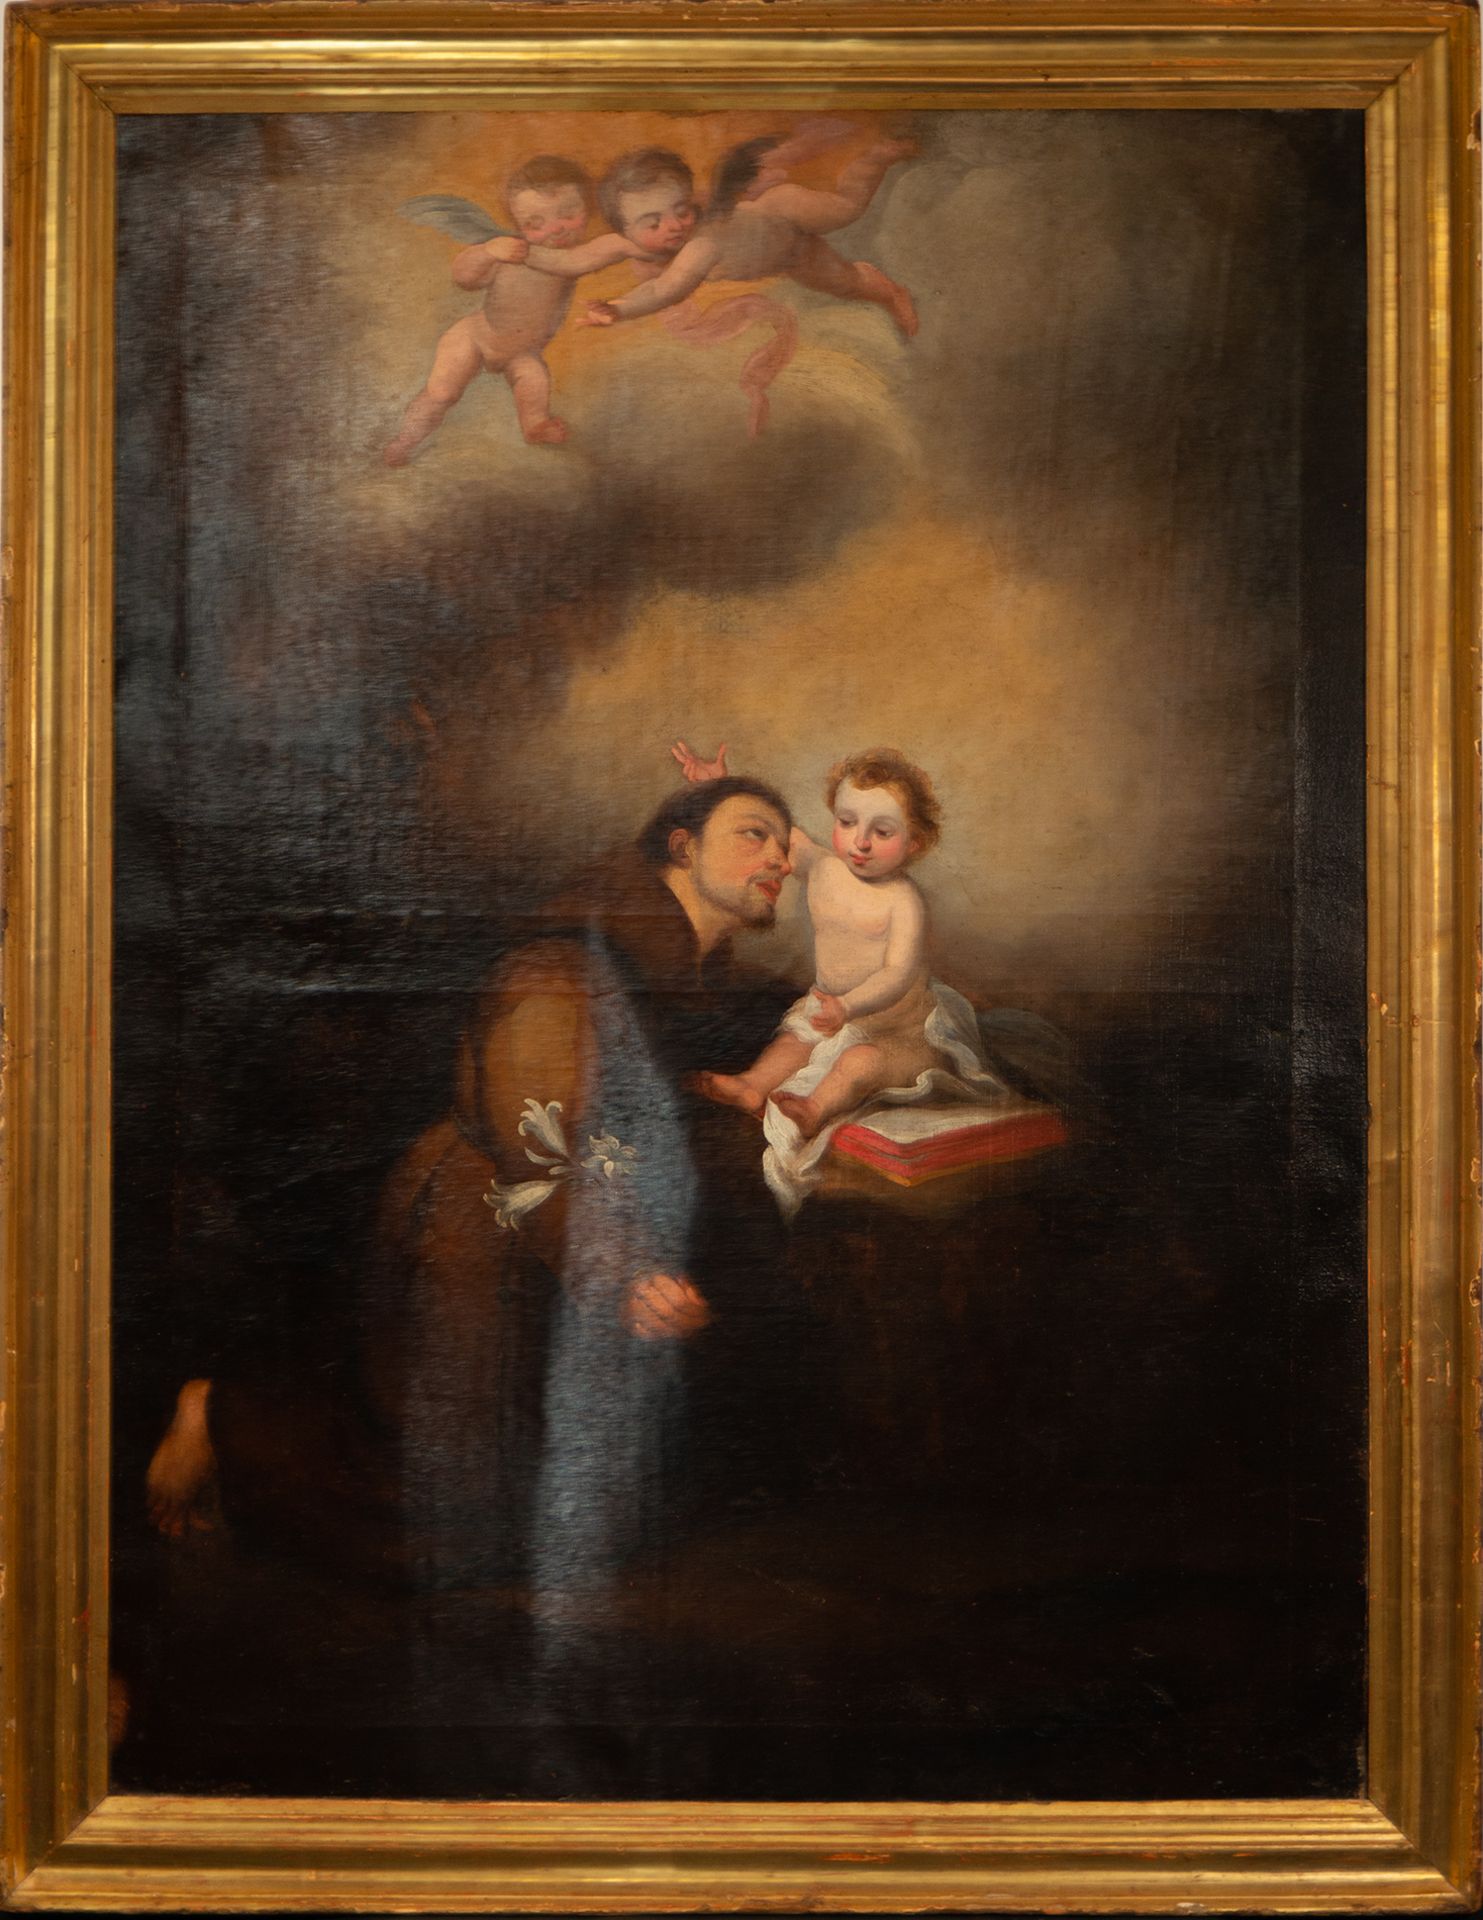 Saint Anthony of Padua with the Child Jesus, follower of Bartolomé Esteban Murillo, Sevillian school